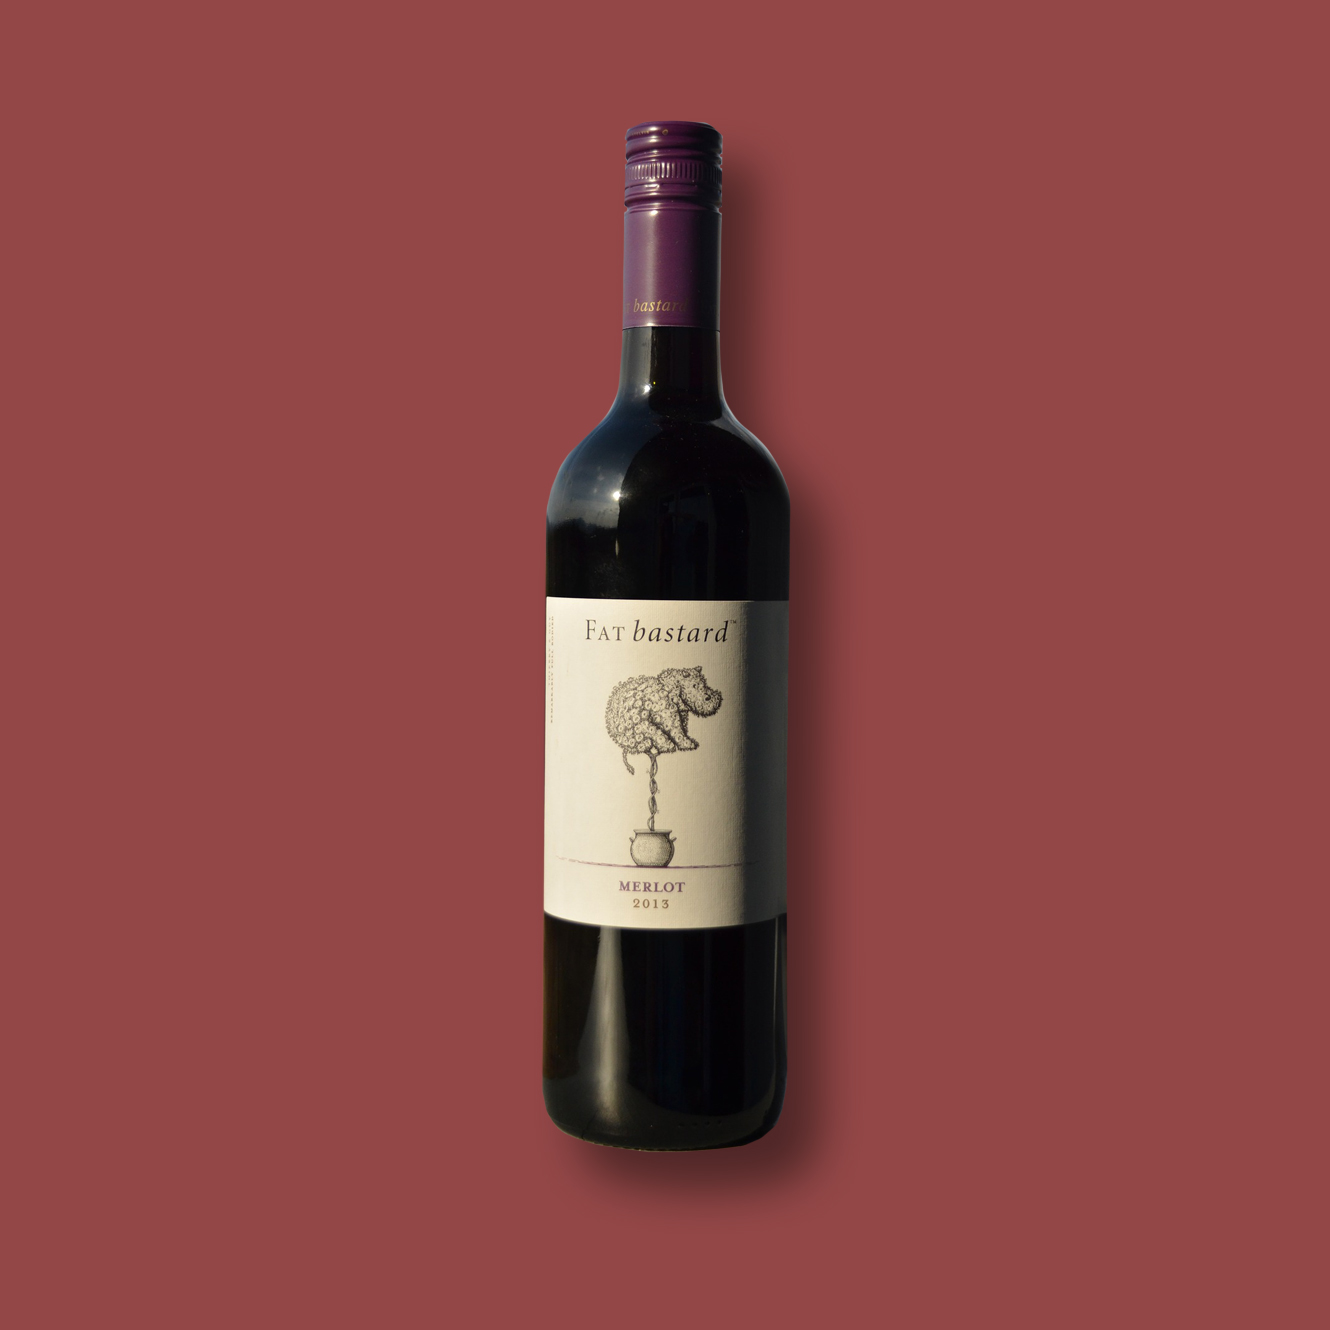 https://bigbanner.com.au/wp-content/uploads/2020/01/wine-sticker-label-1.jpg